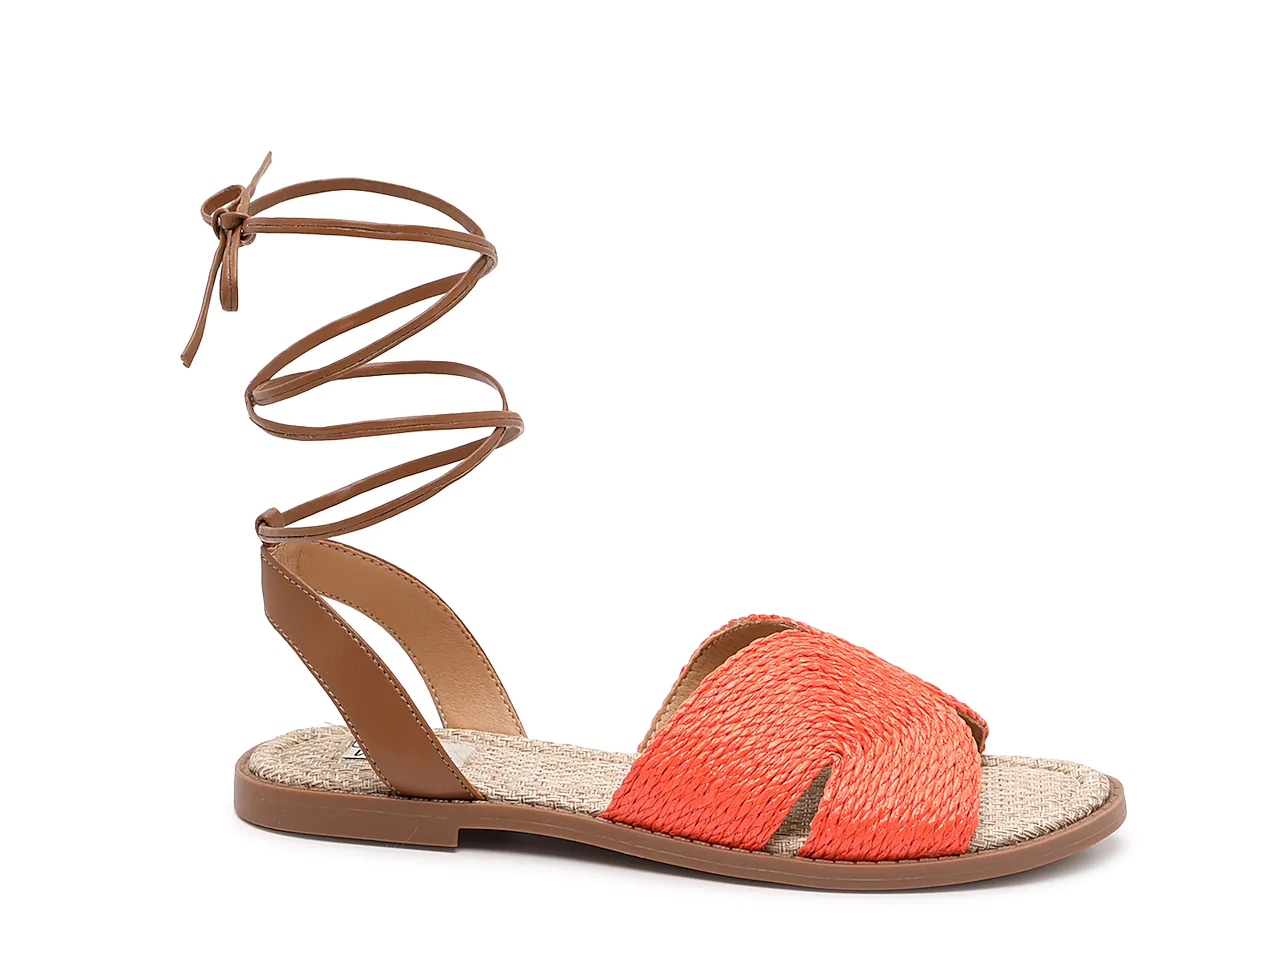 A coral strappy sandal